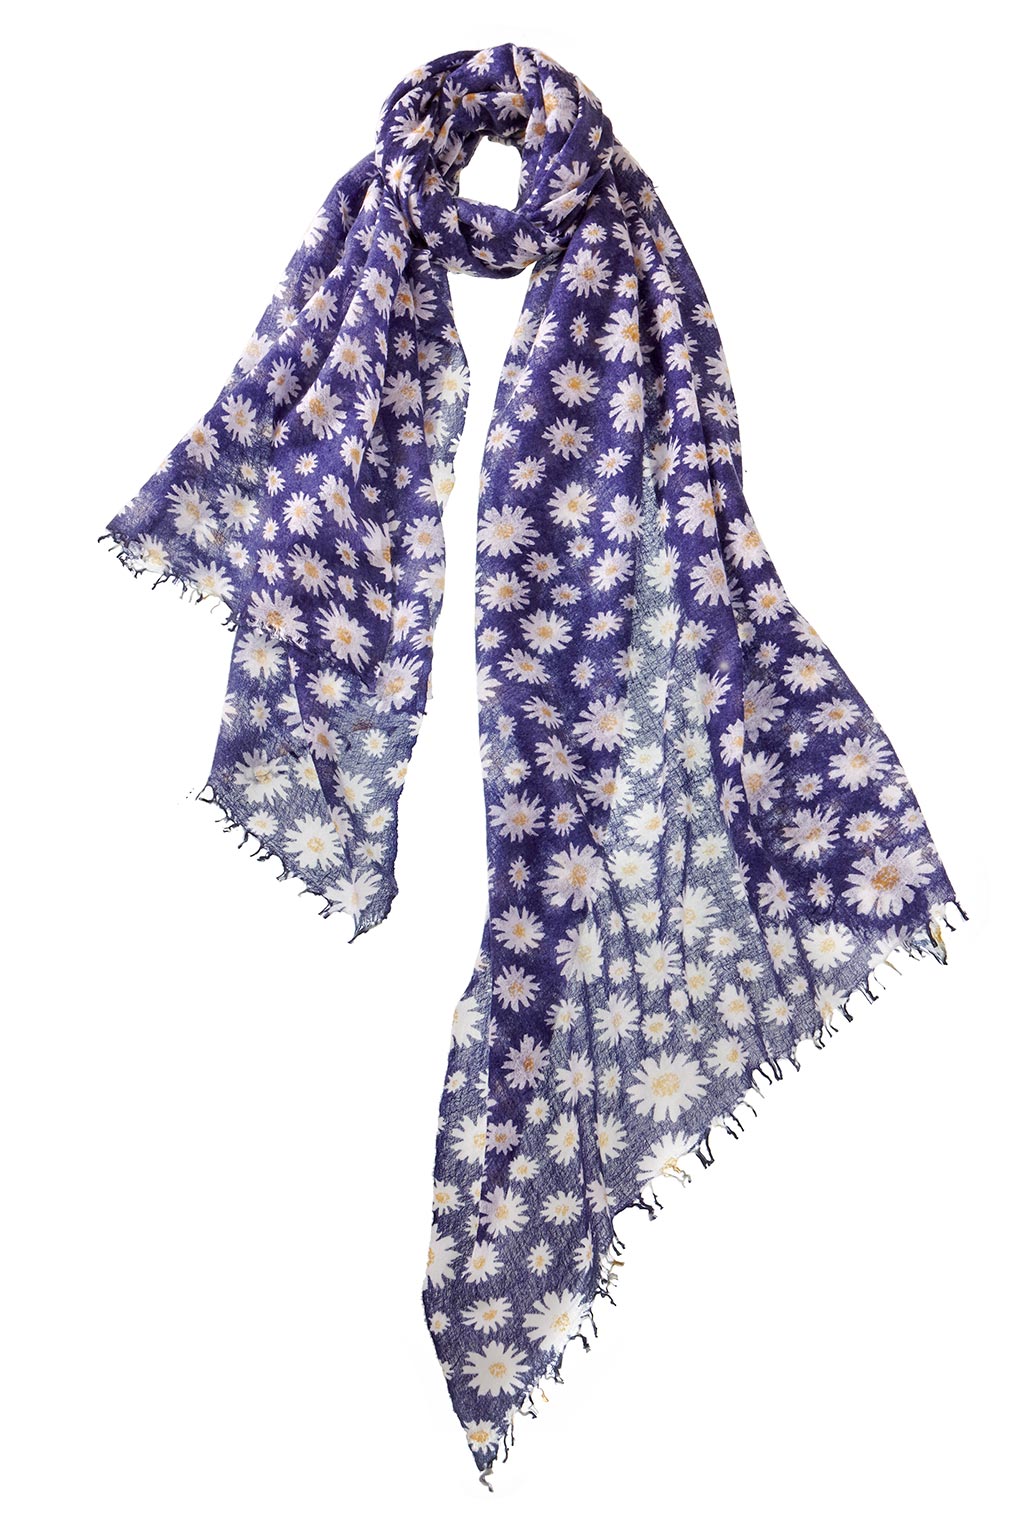 Alpine Cashmere daisy print scarf in blueberry blue